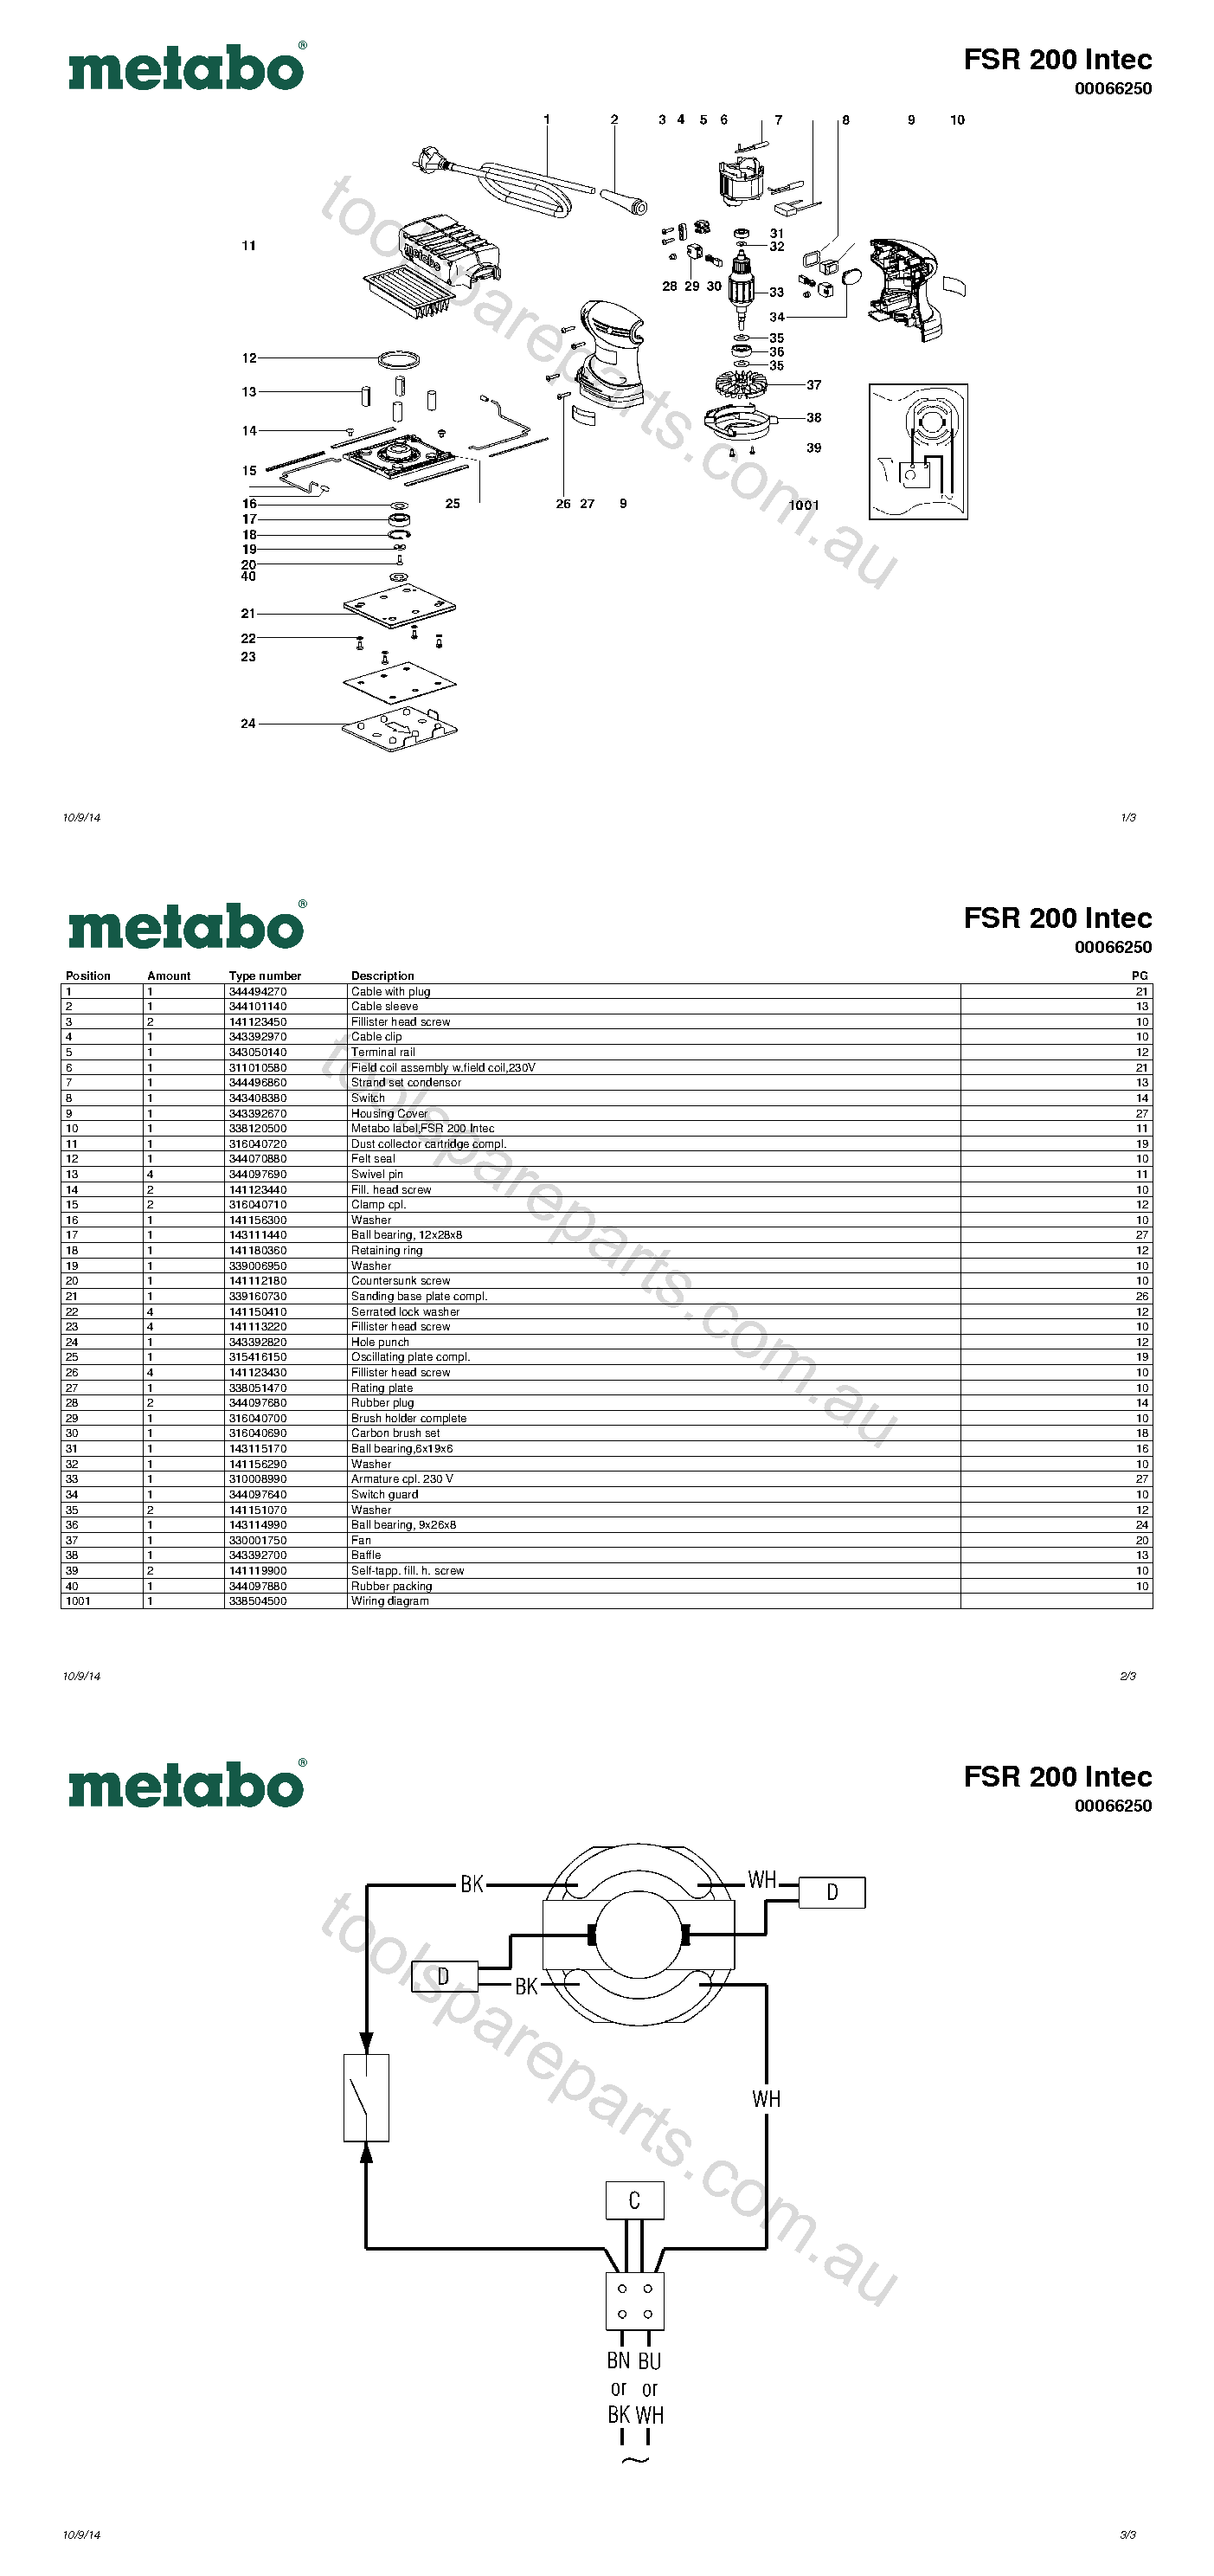 Metabo FSR 200 Intec 00066250  Diagram 1